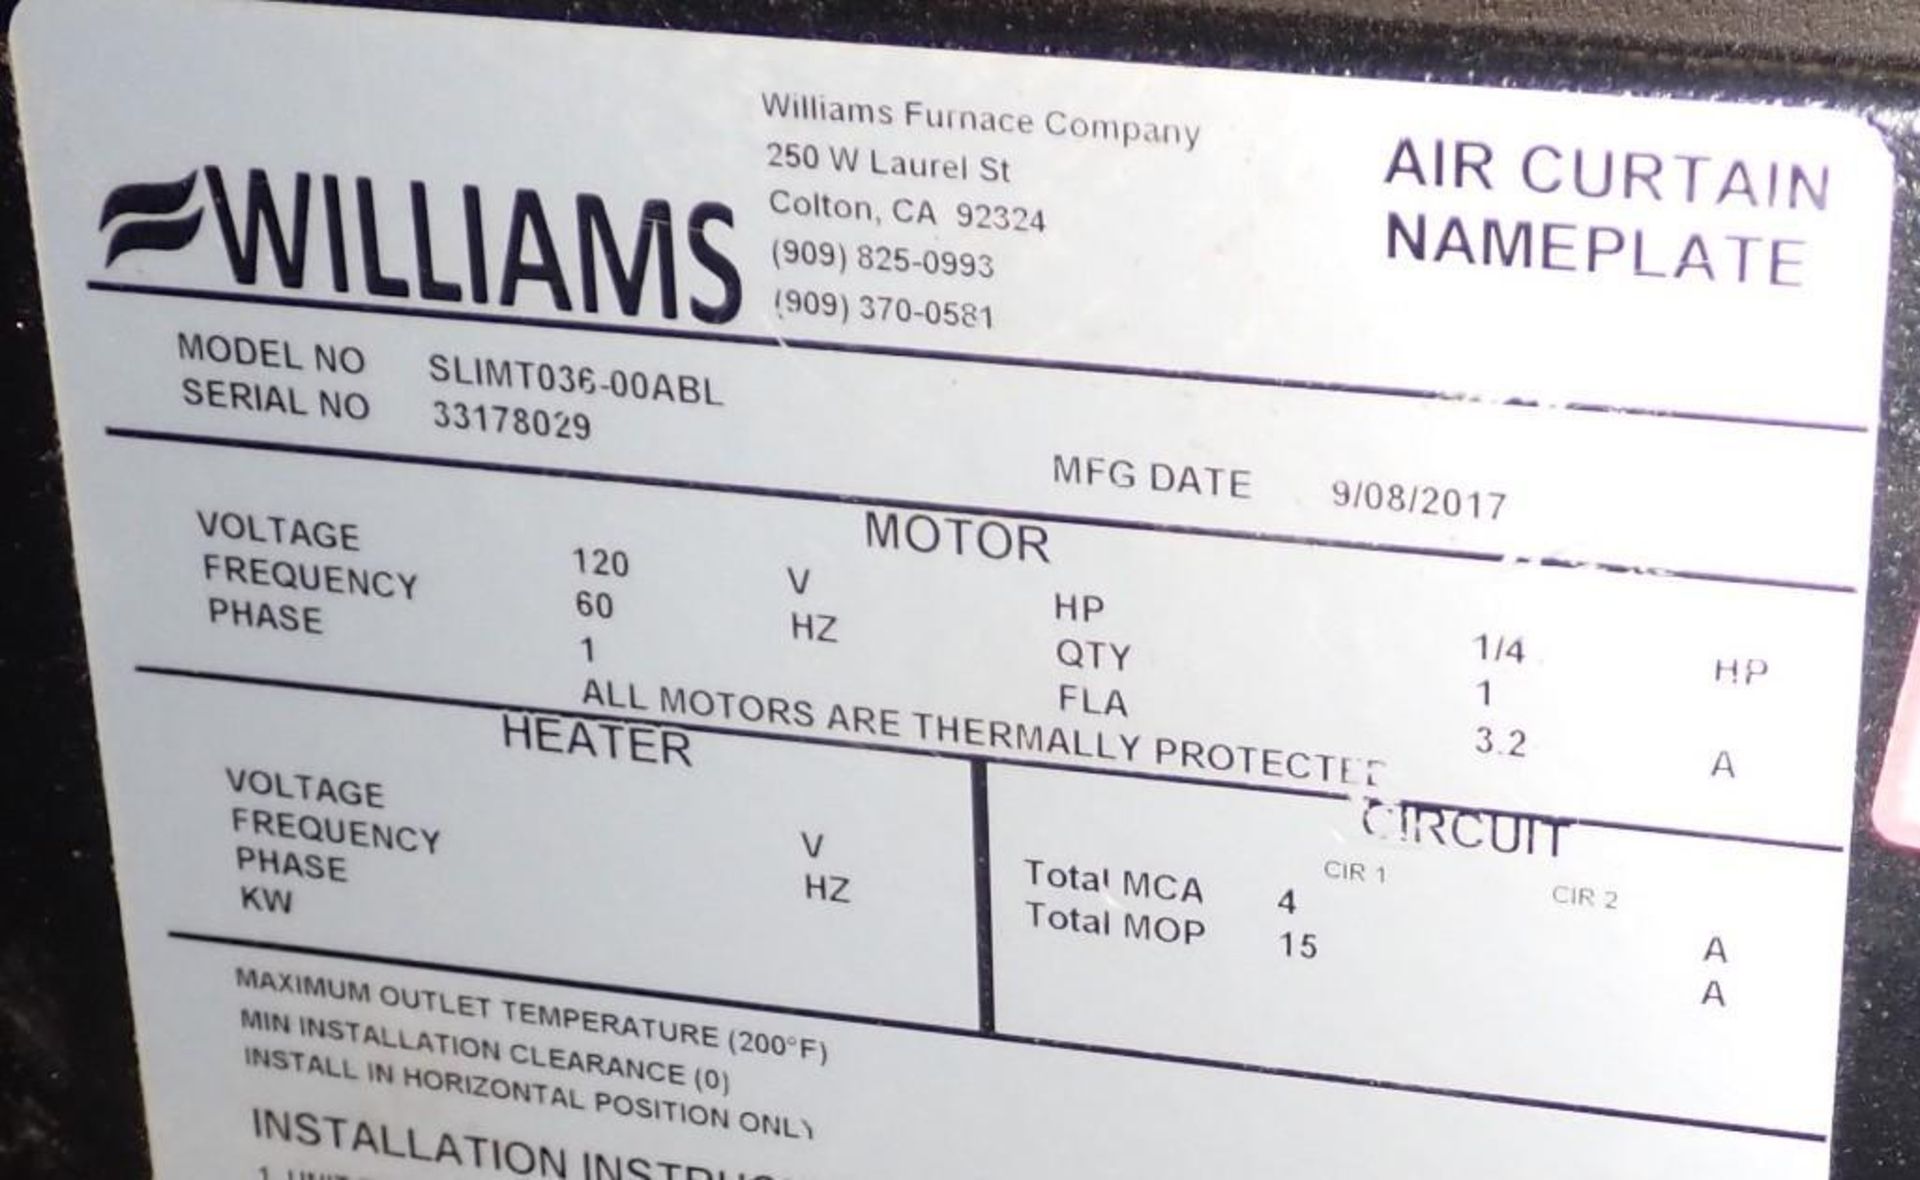 Williams #SLIMT036-00ABL Air Curtain - Image 5 of 6